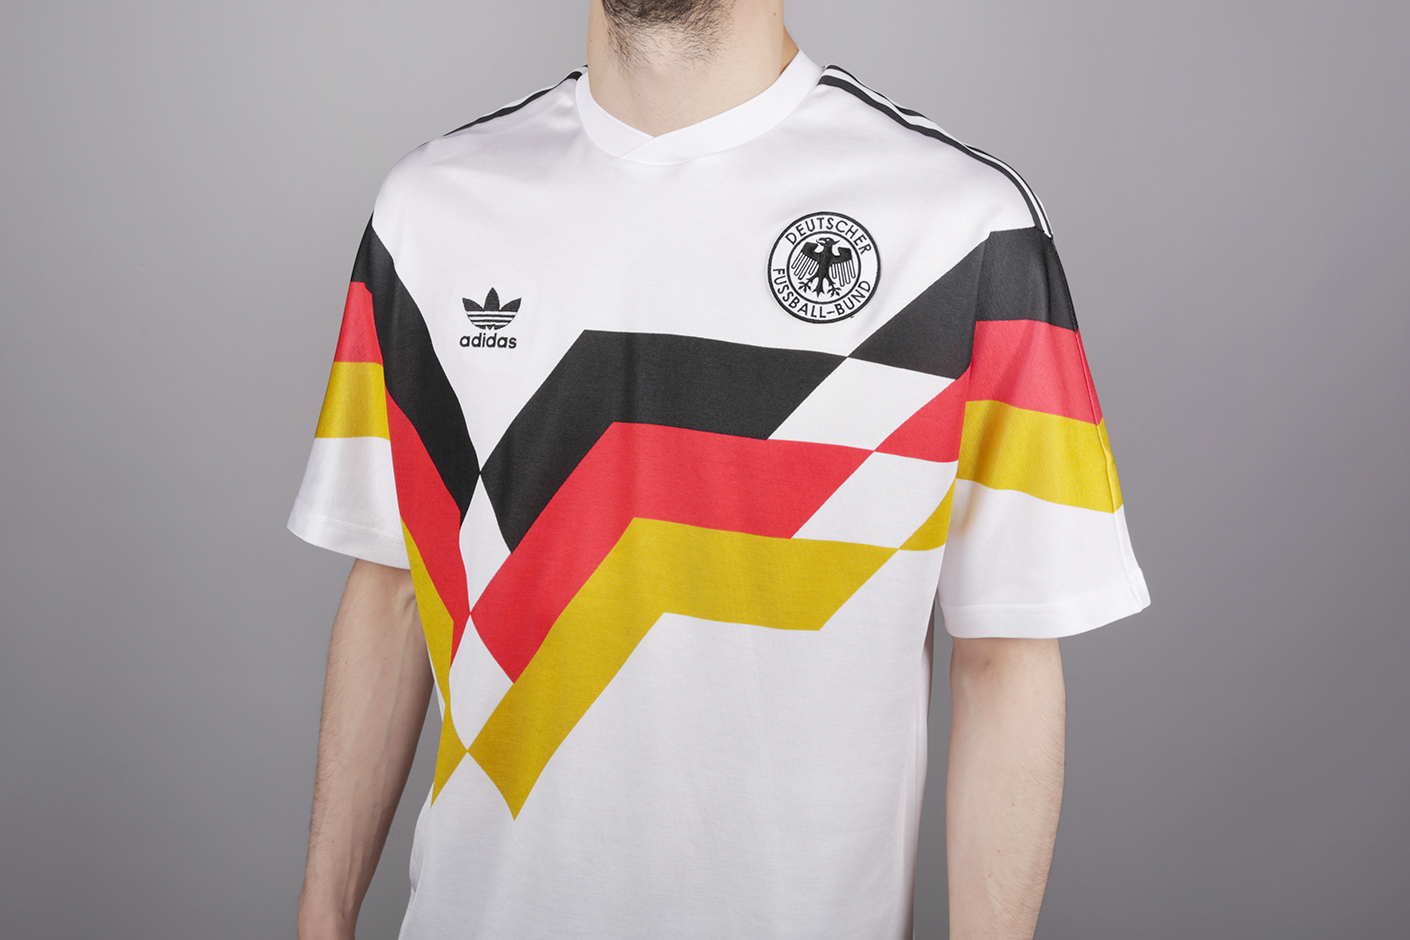 Адидас оригинал германия. Футболка adidas Jersey Germany. Футболка adidas Originals сборной Германии. Адидас сборная Германии 1992. Адидас сборная Германии 1990.